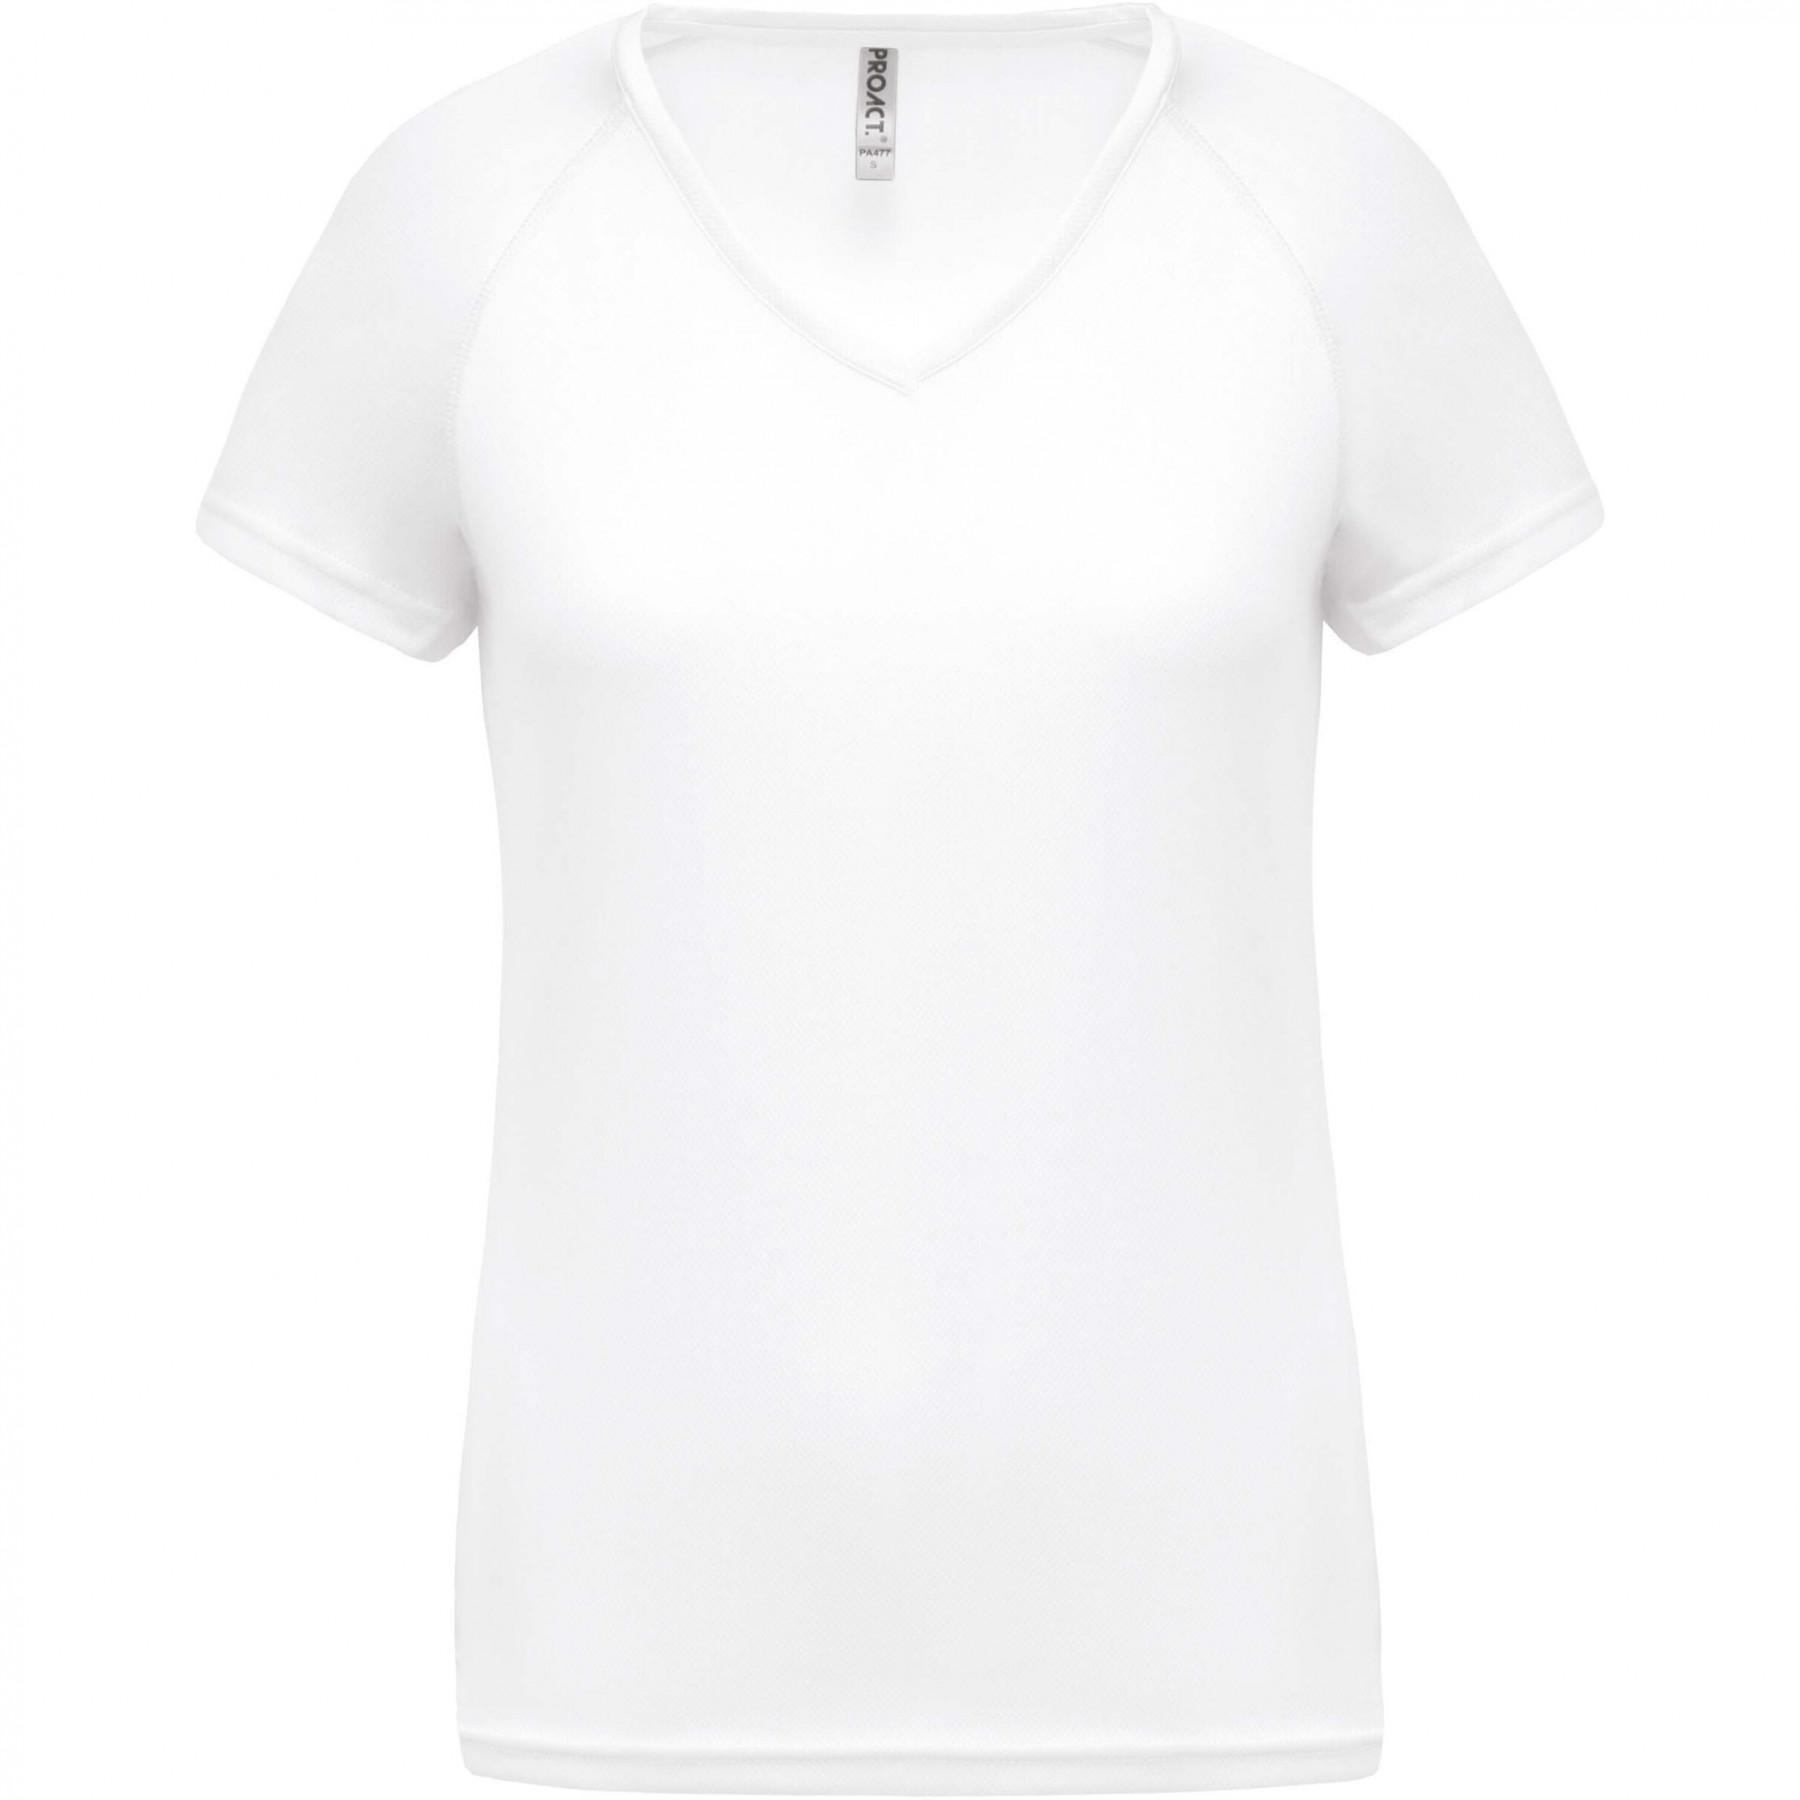 Camiseta mujer V-neck Proact Sport blanco